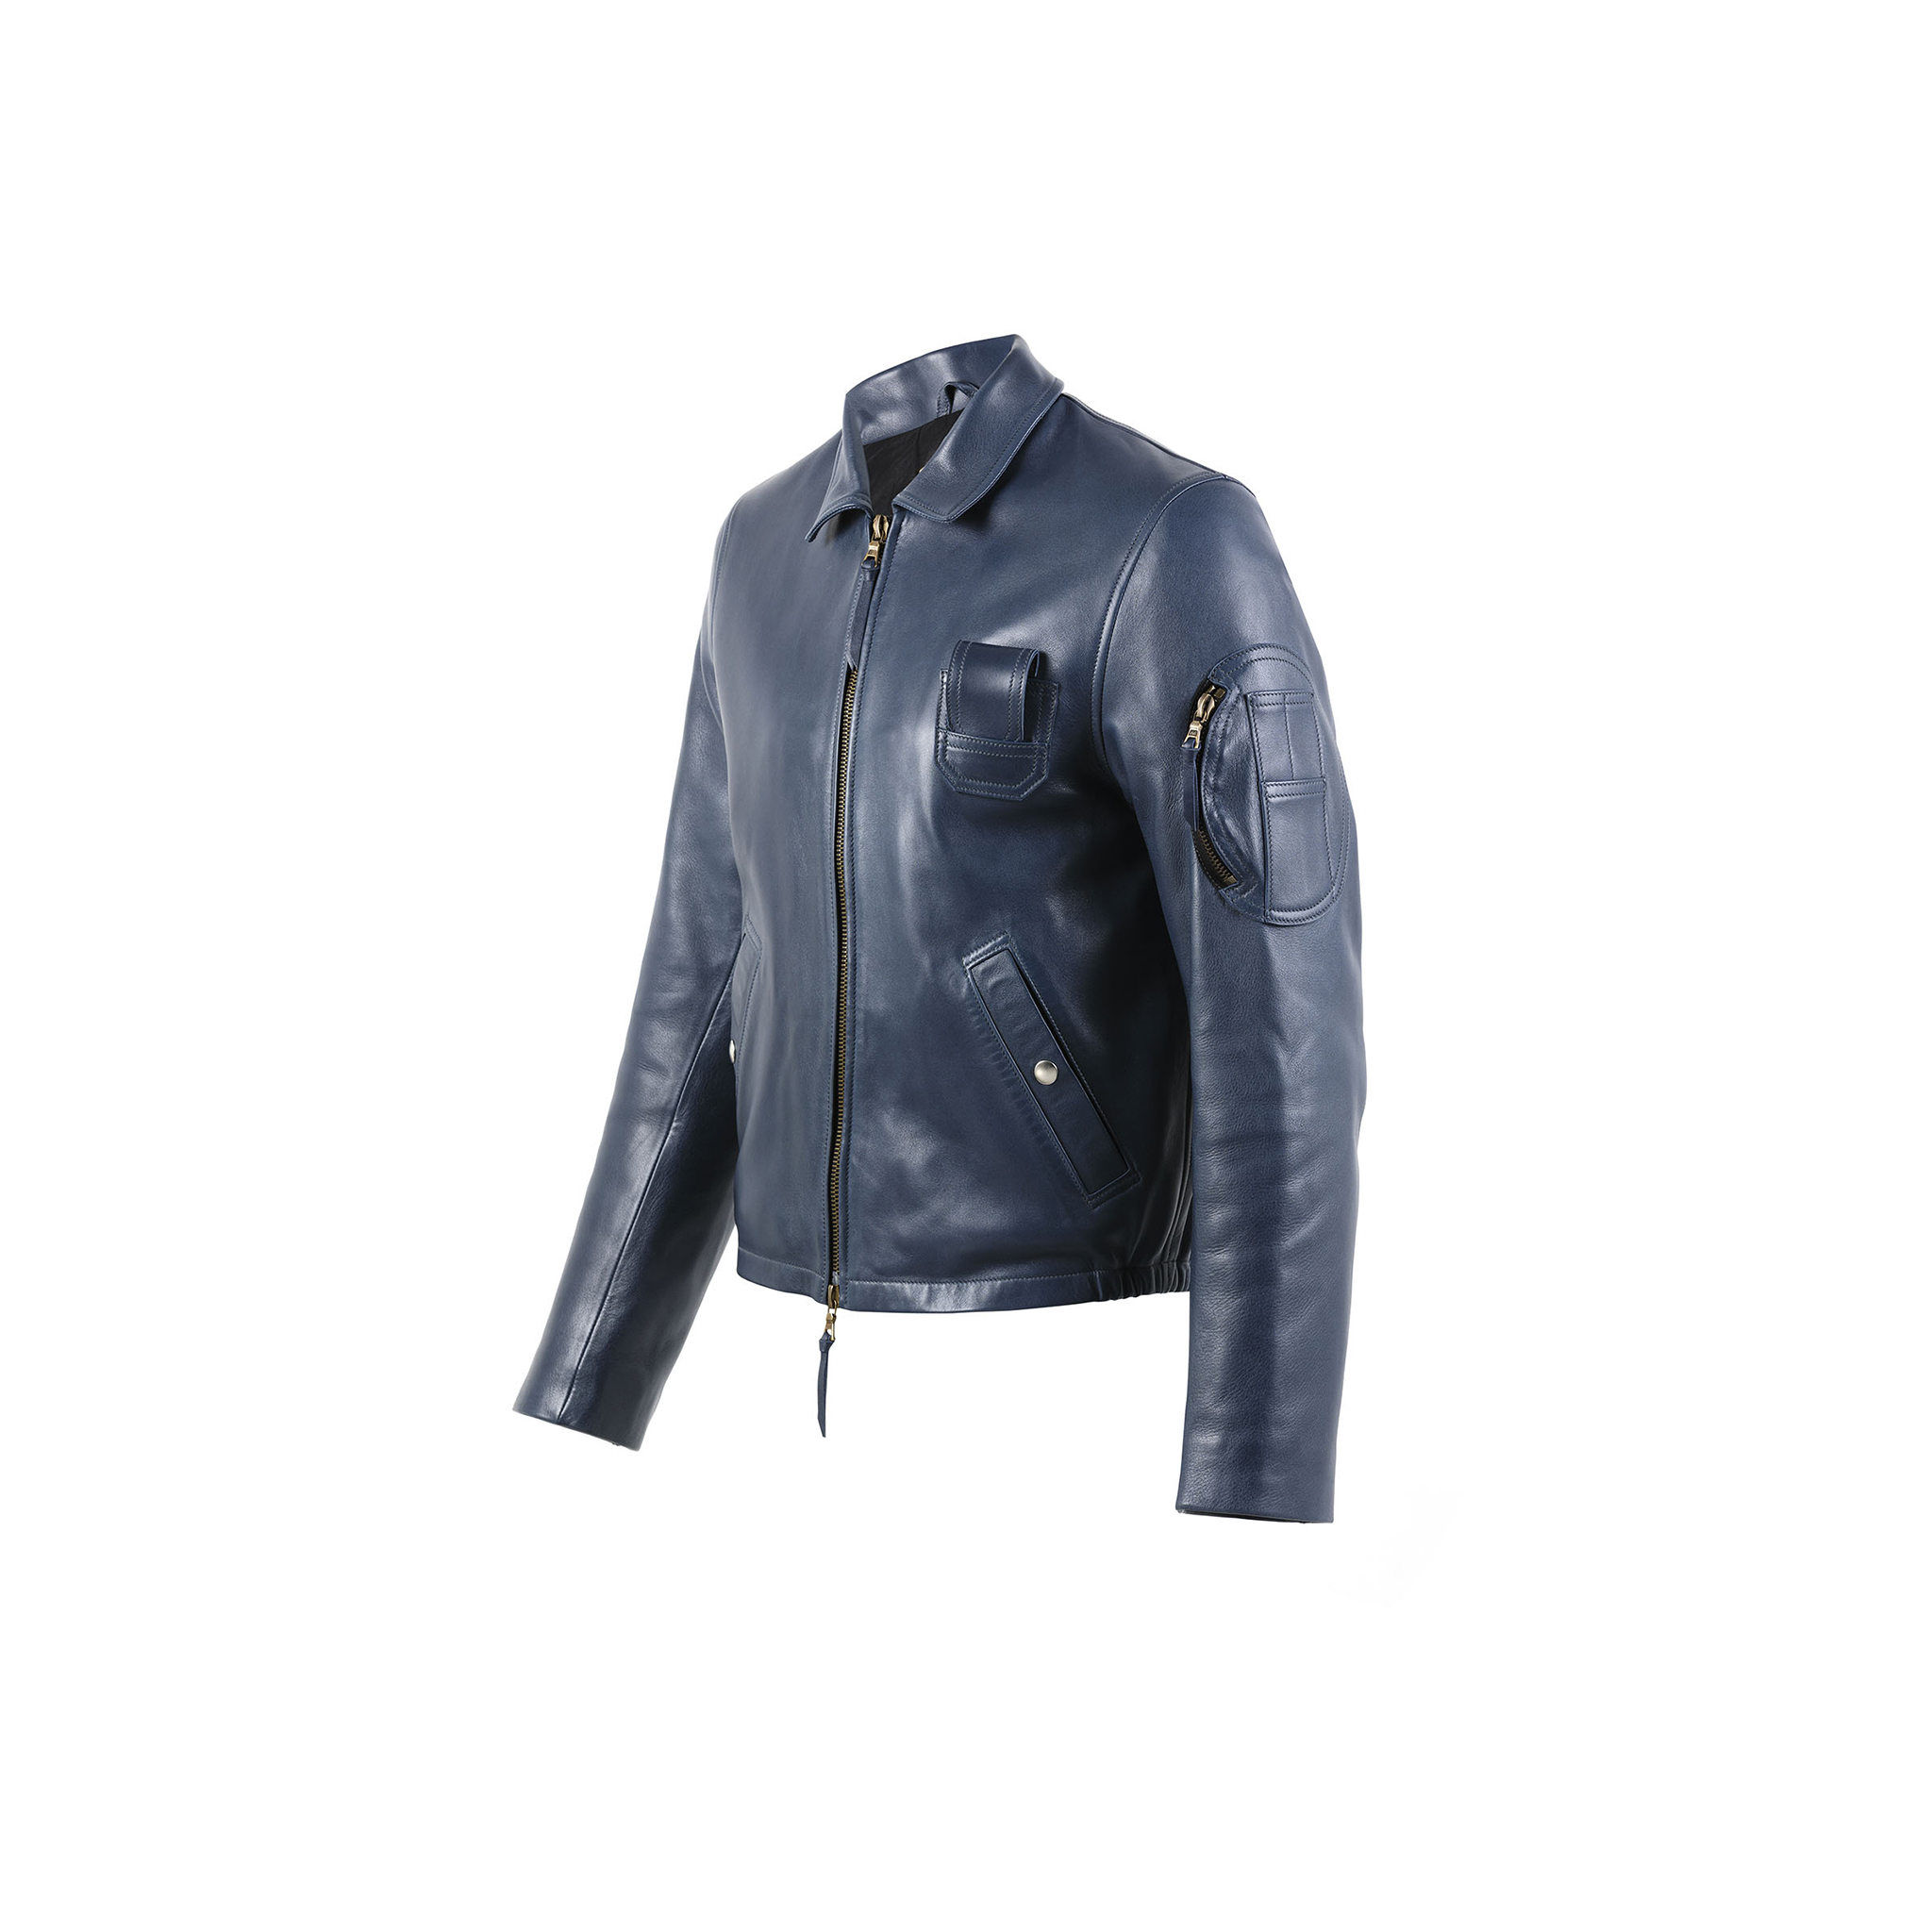 Pilote Français Jacket - Glossy leather - Blue color